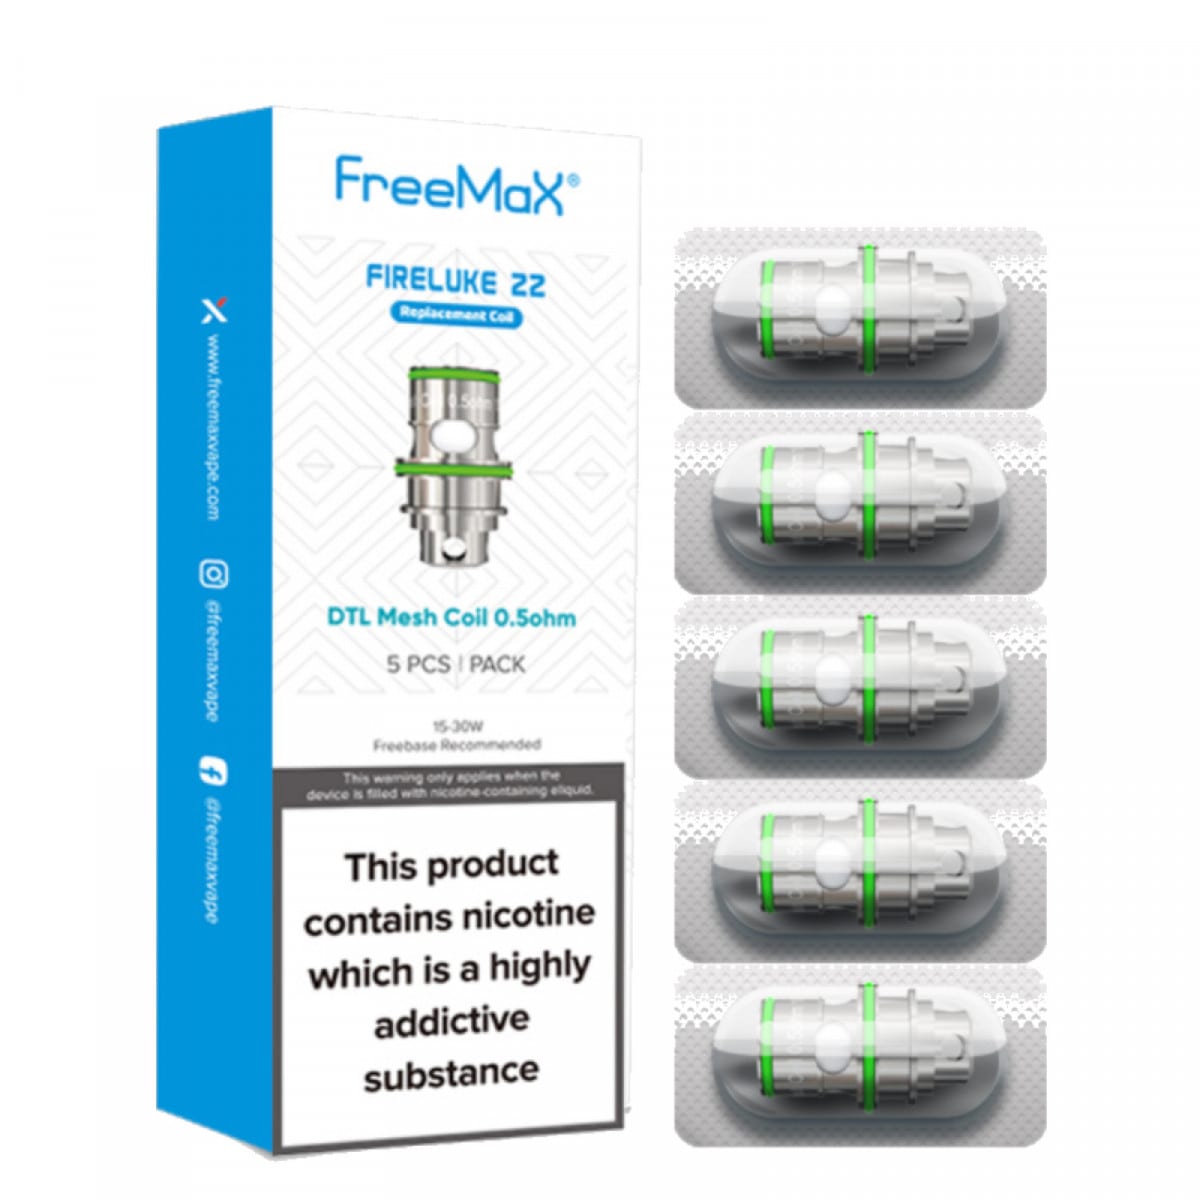 Freemax Fireluke 22 Replacement Coils 5 Pack-DTL Mesh 0.5ohm